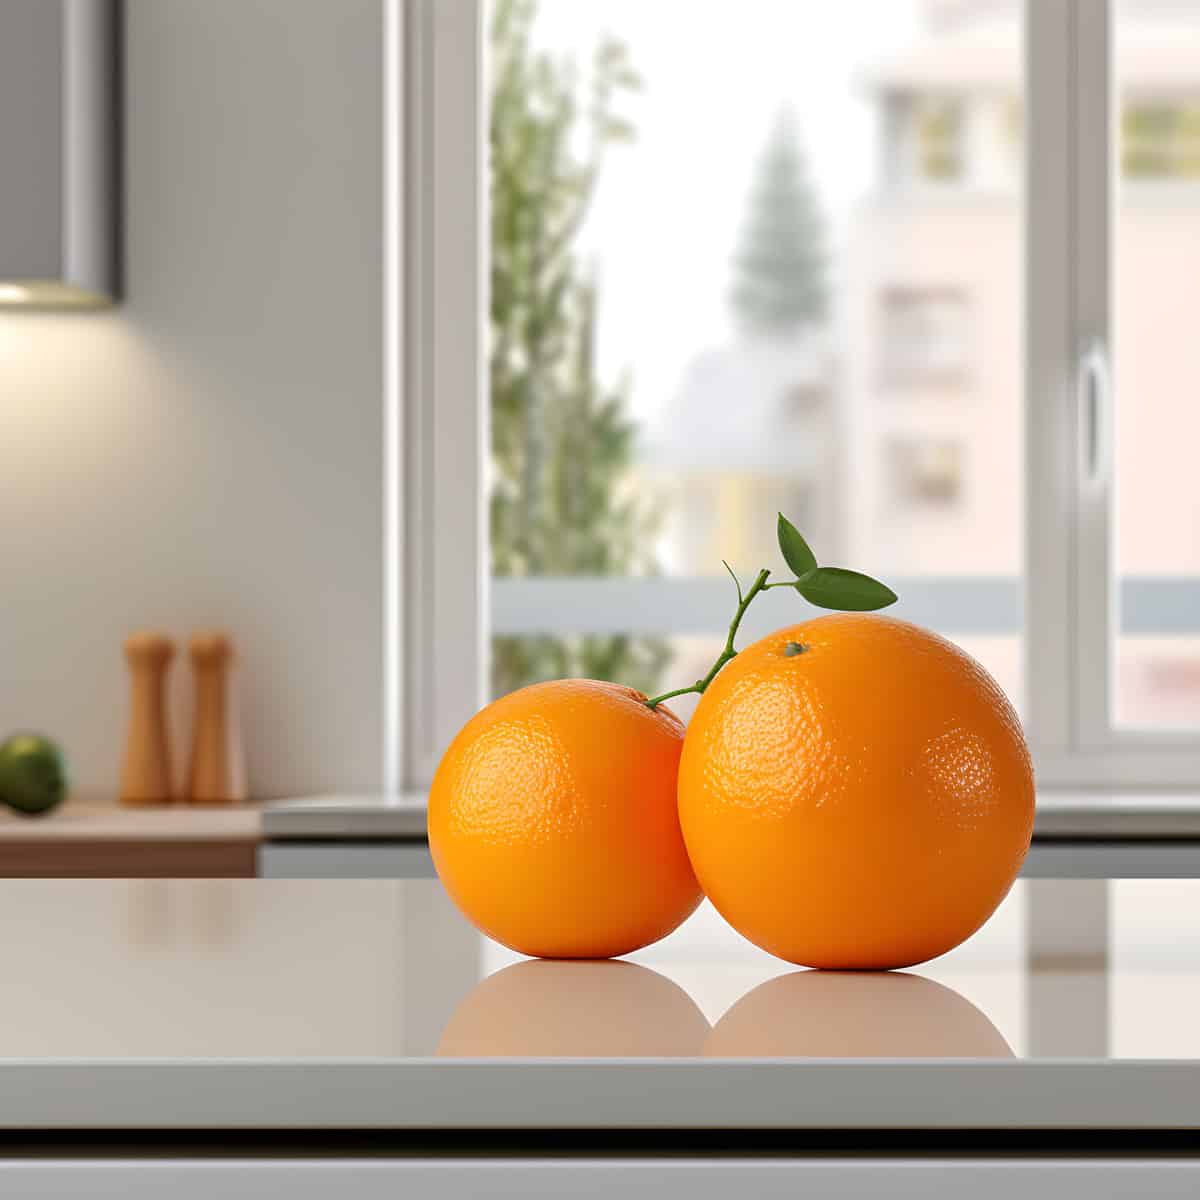 Orange on a kitchen counter